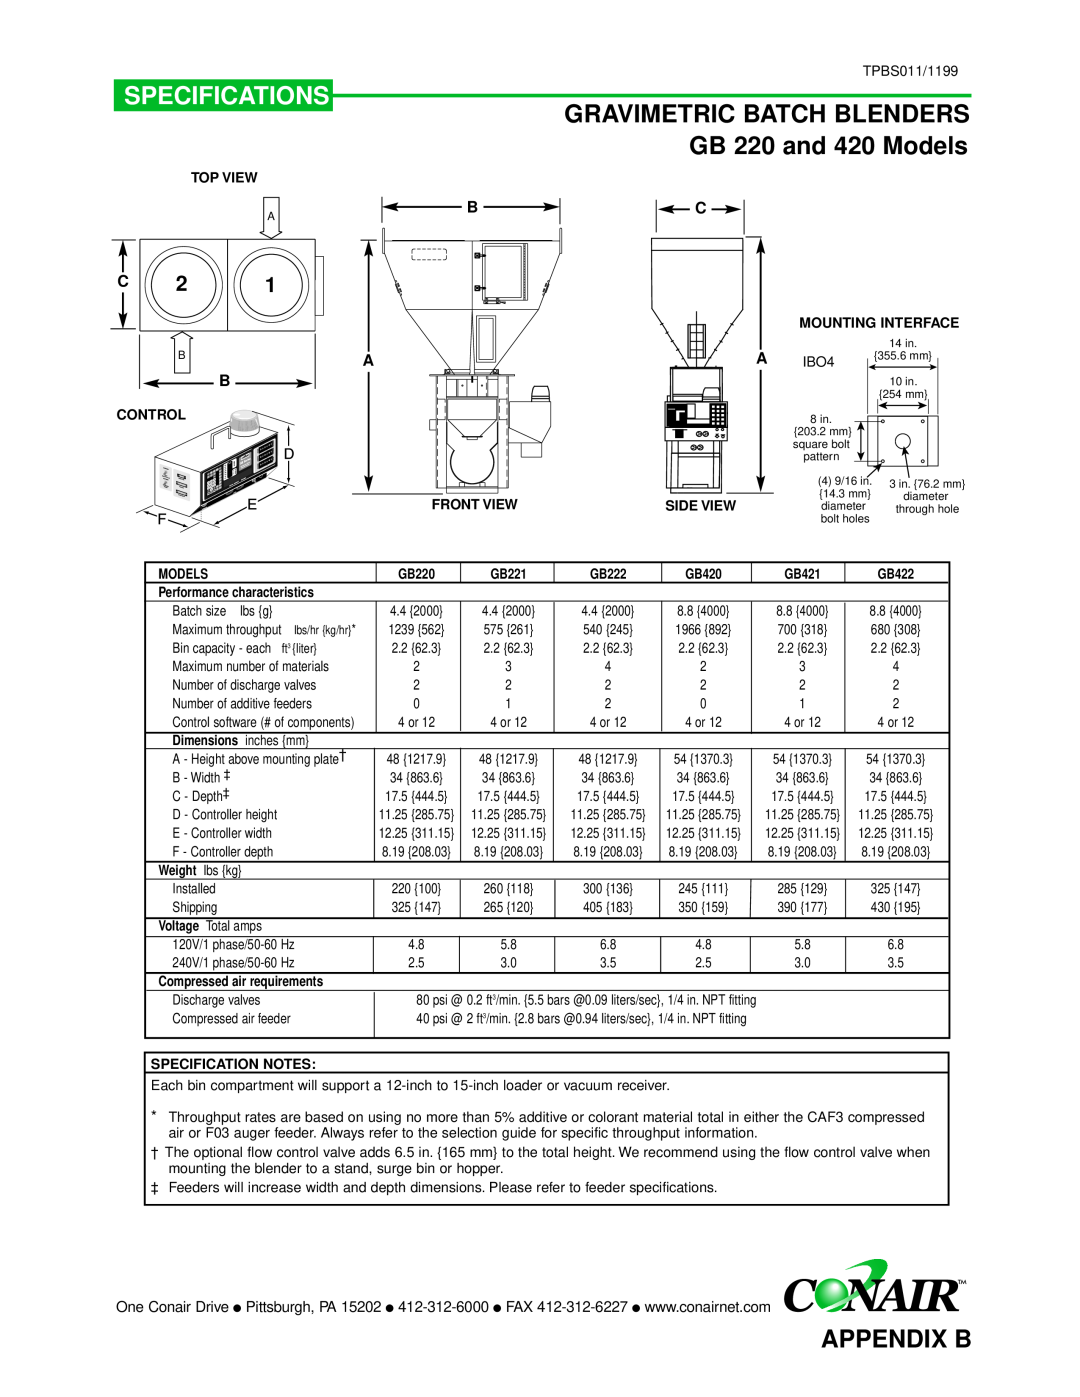 Conair GB/ WSB manual GRAVIMETRIC BATCH BLENDERS GB 220 and 420 Models, Specifications, Appendix B 